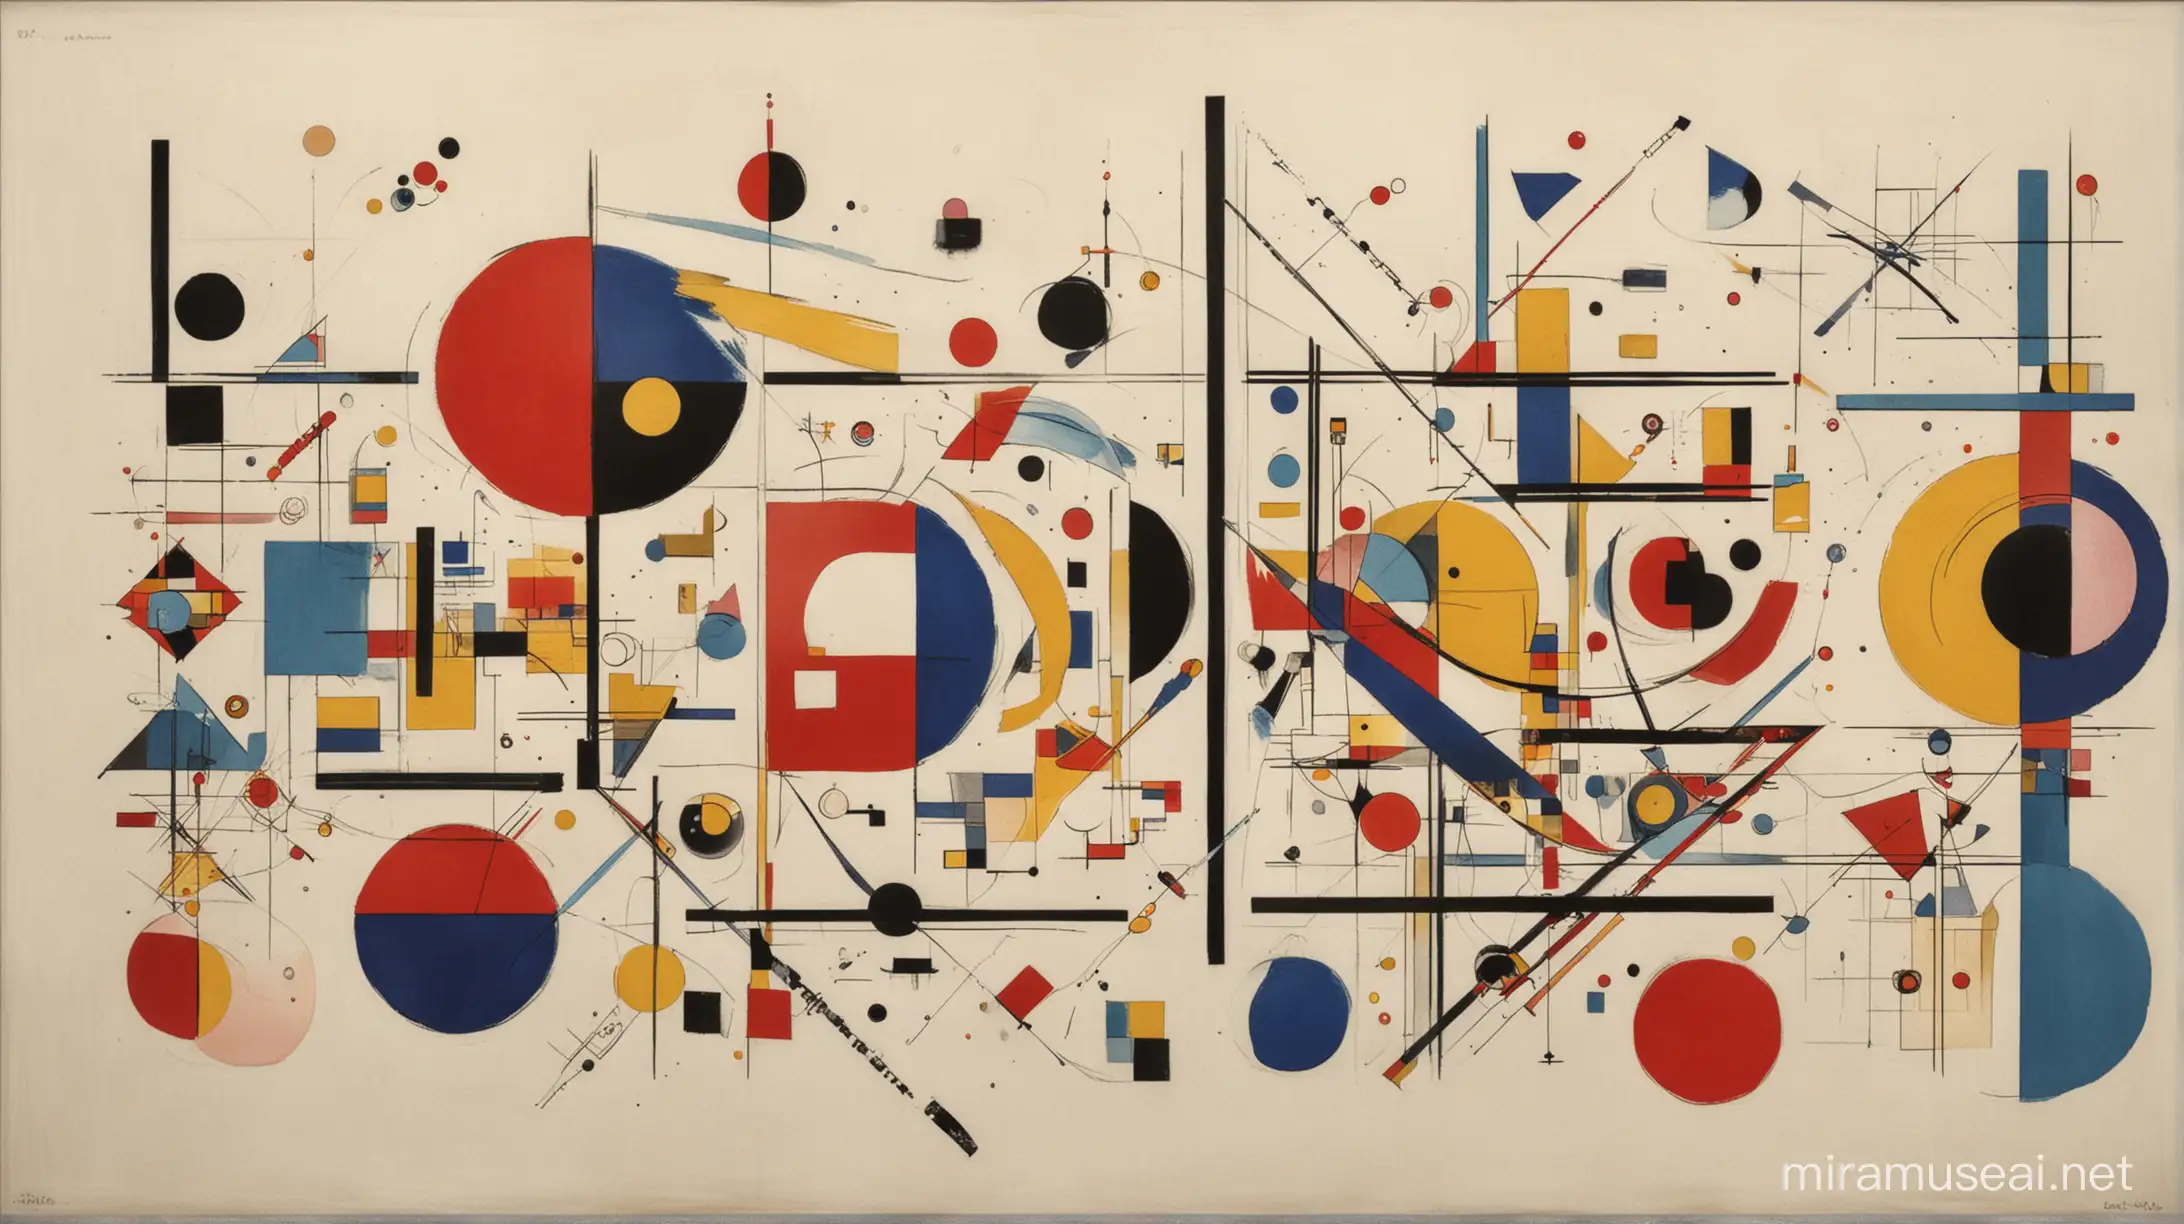 Abstract Fusion of Kandinsky and Mondrian Styles